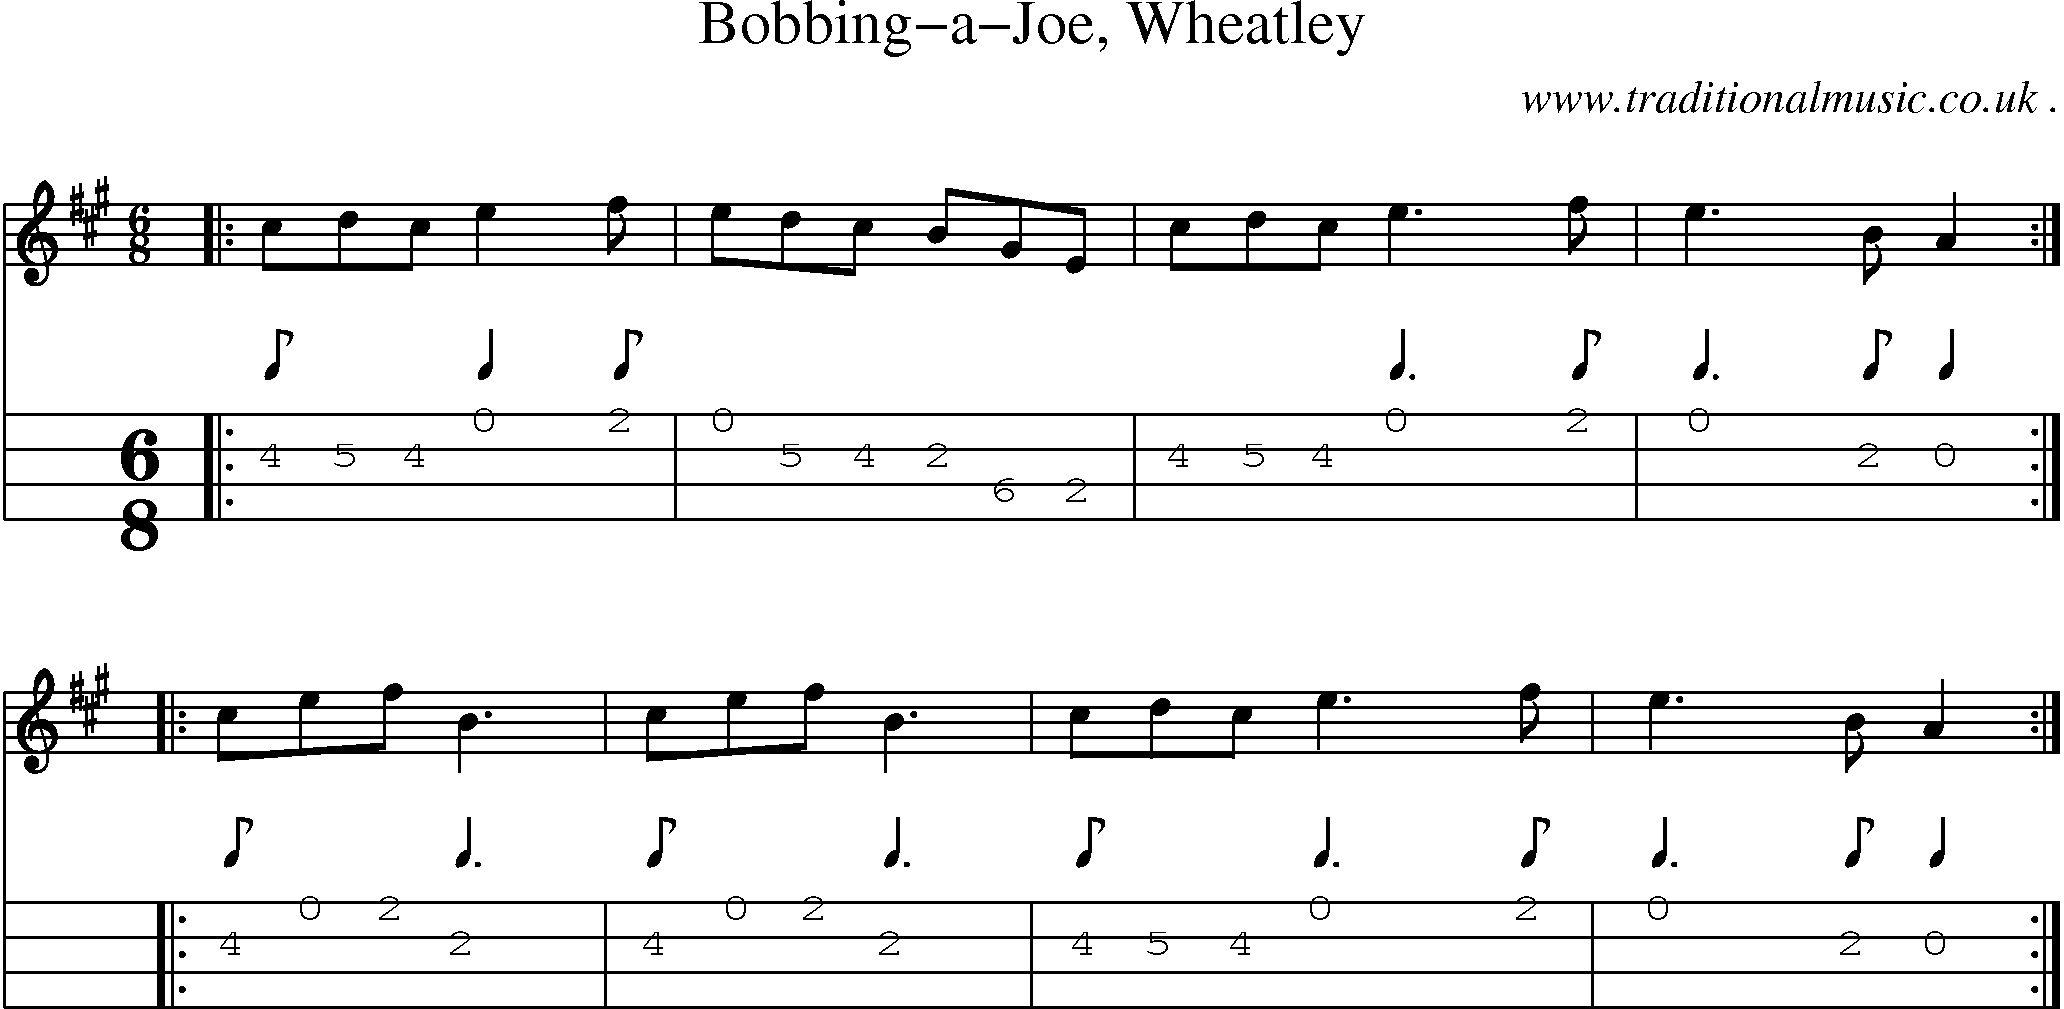 Sheet-Music and Mandolin Tabs for Bobbing-a-joe Wheatley